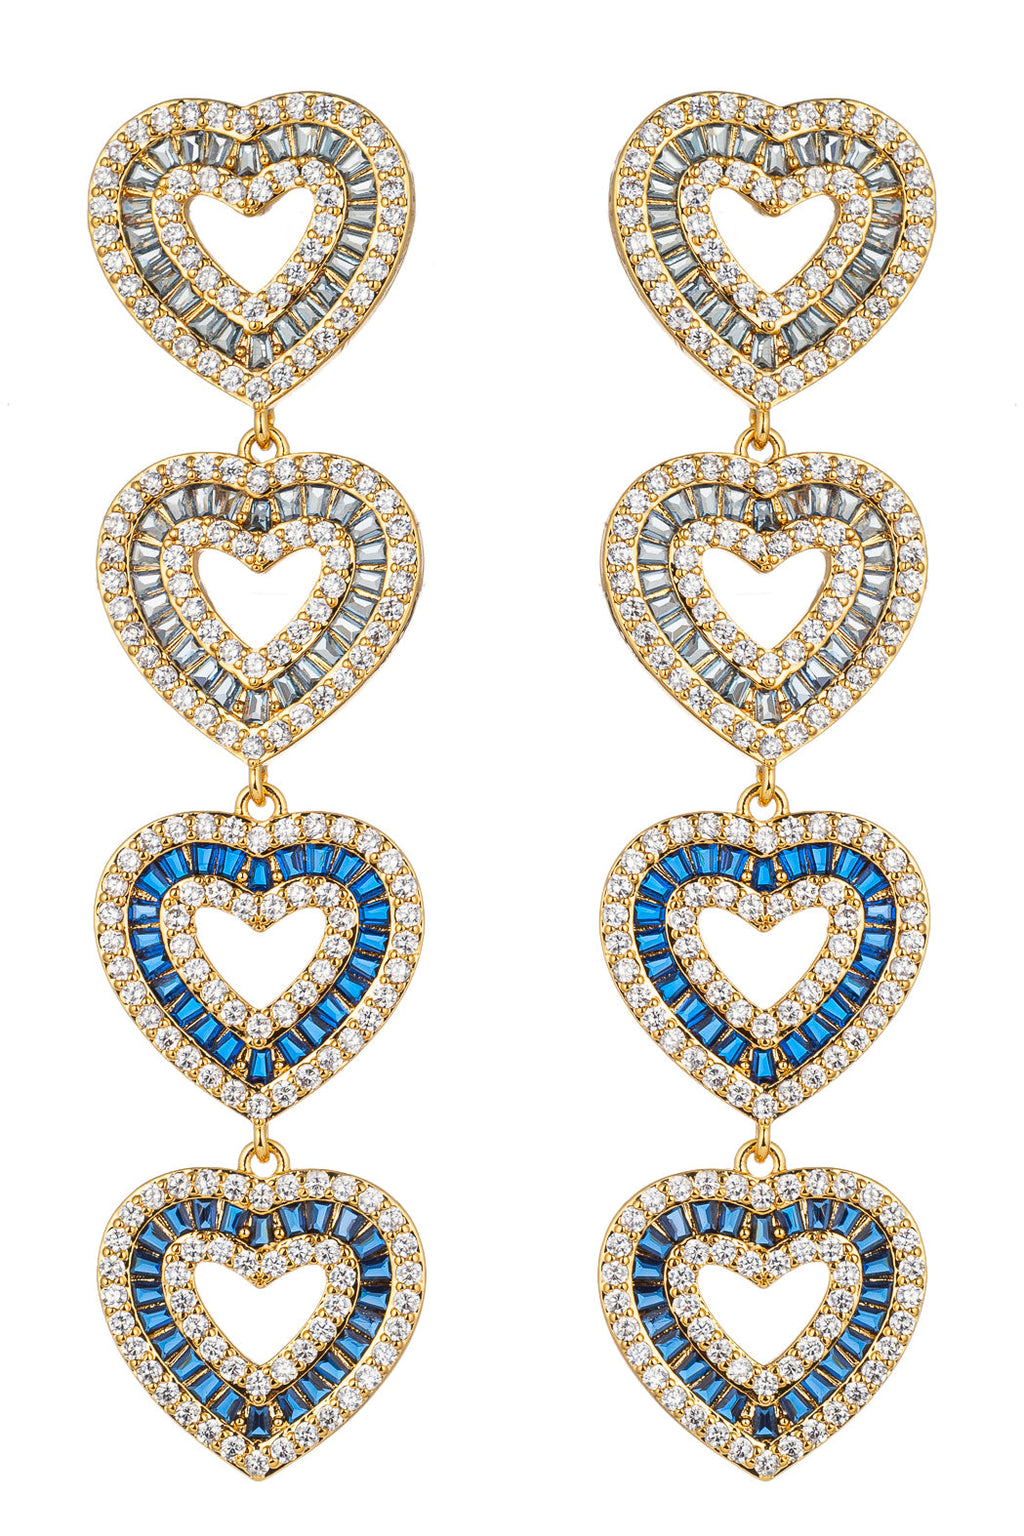 Willow Hearts Cubic Zirconia Dangle Earrings: Elegance Meets Romance.